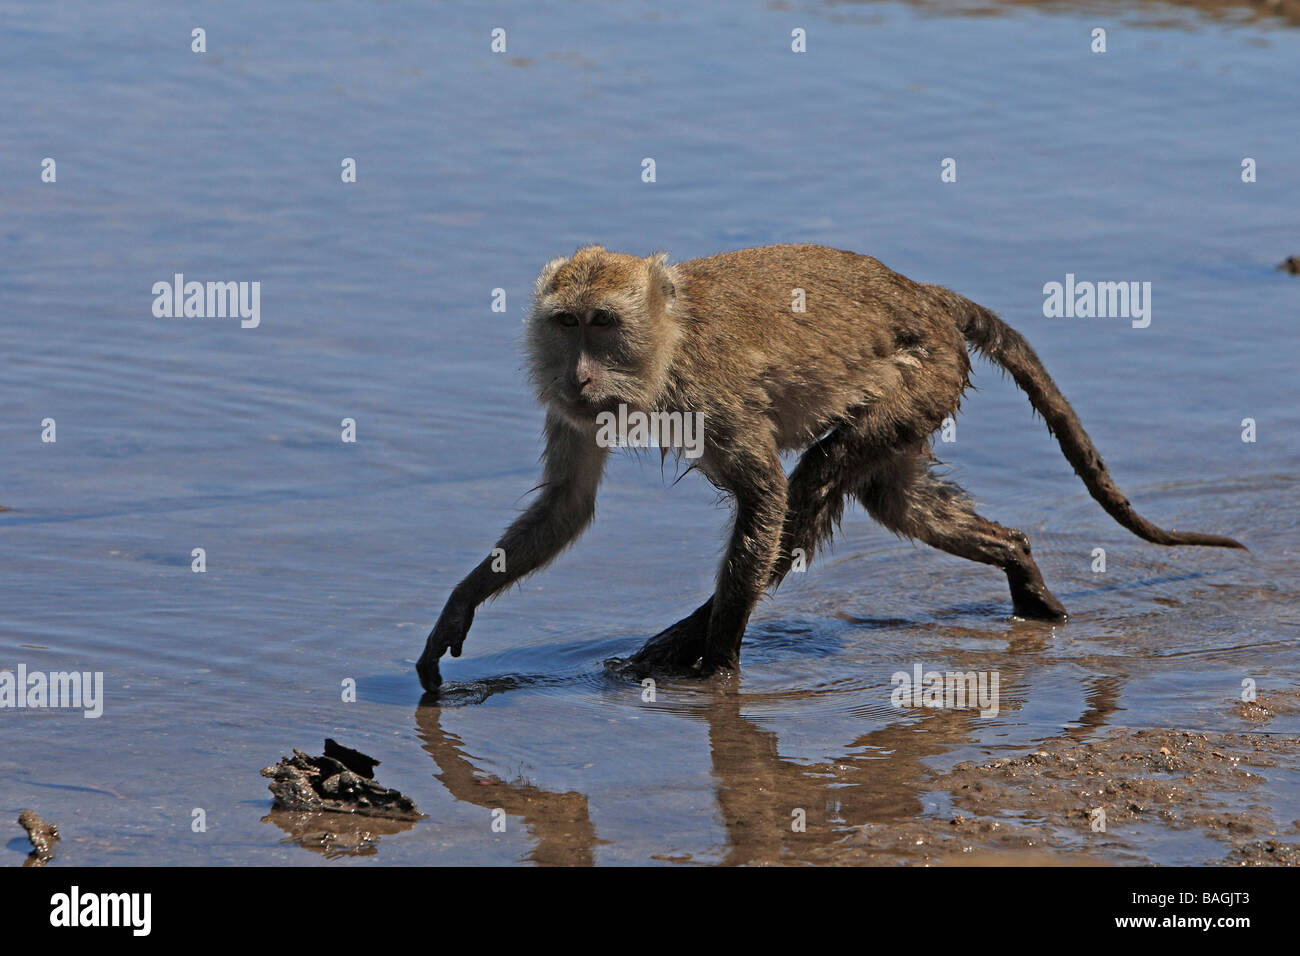 Macaque à longue queue, de manger du crabe (Macaca fascicularis Macaque, Macaca irus) se nourrissent dans les eaux peu profondes Banque D'Images